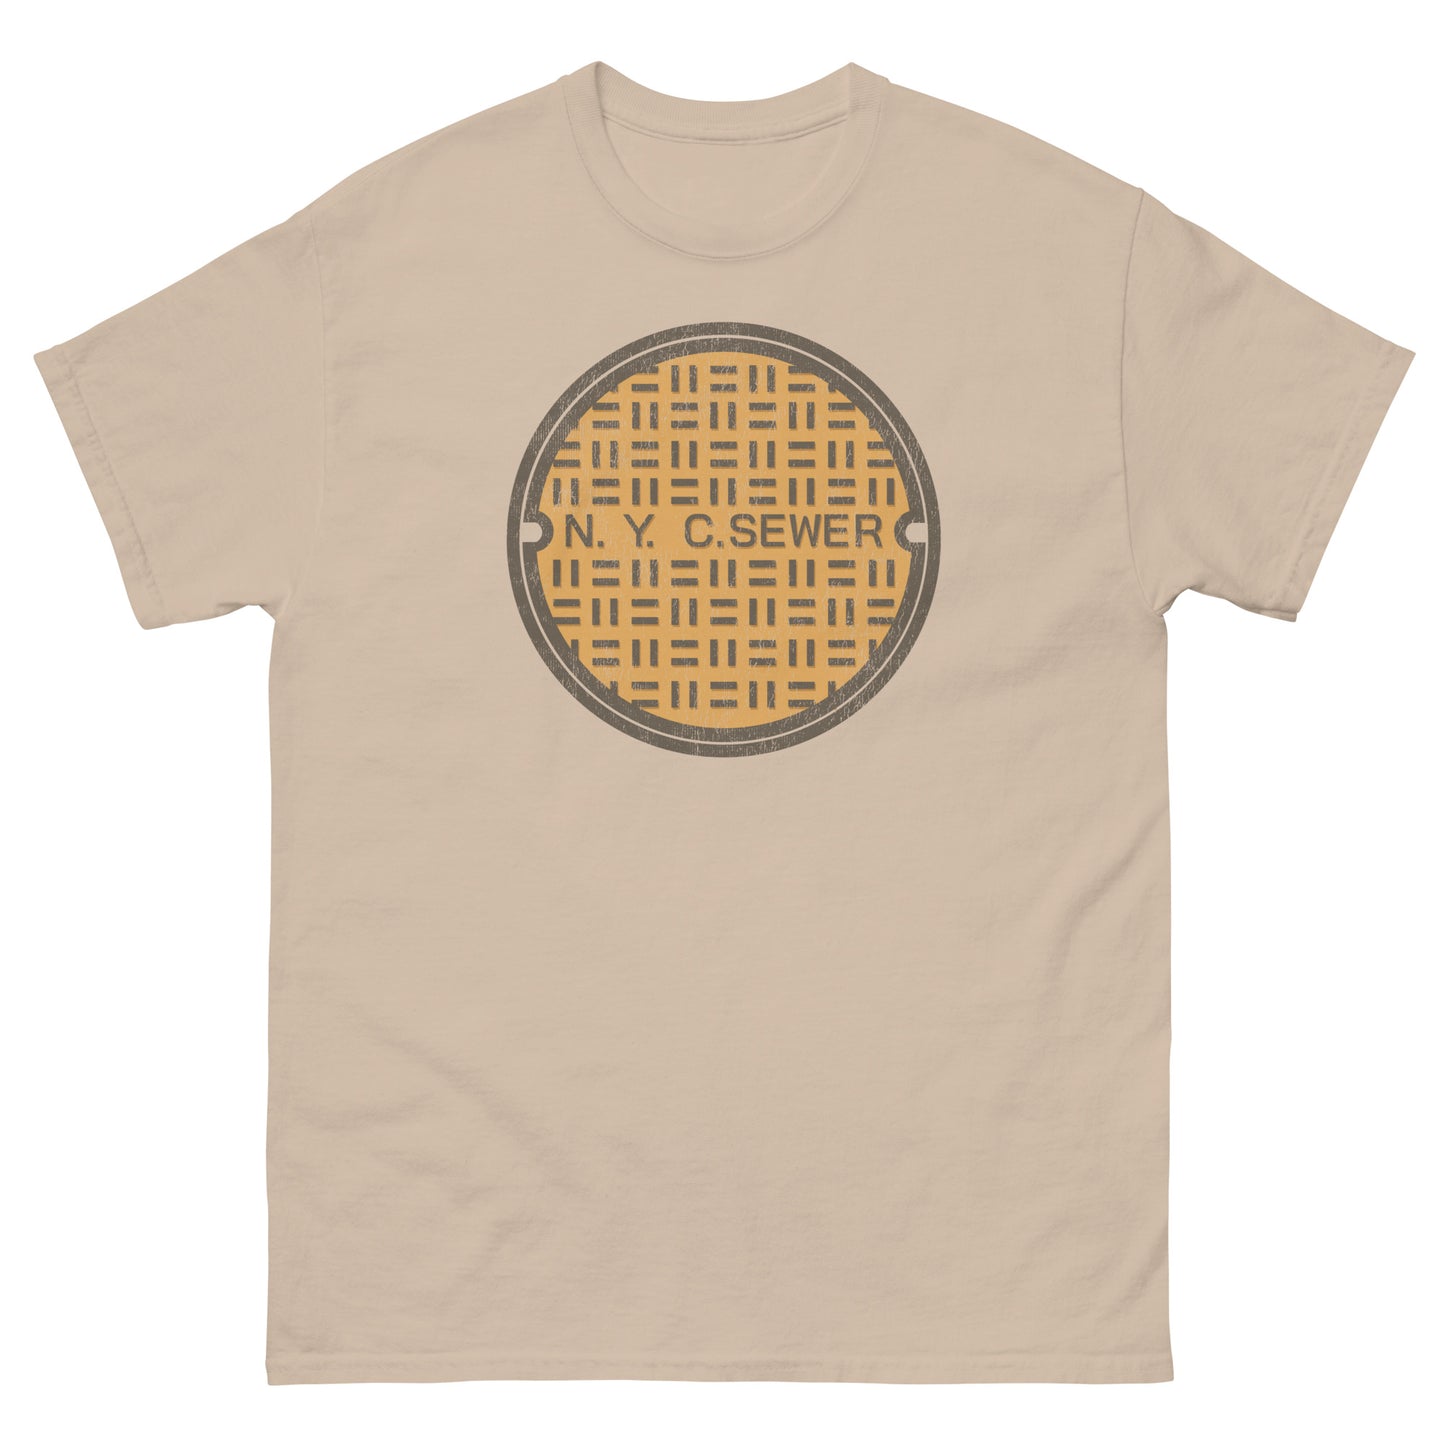 N.Y.C Sewer Cap - Standard T-Shirt